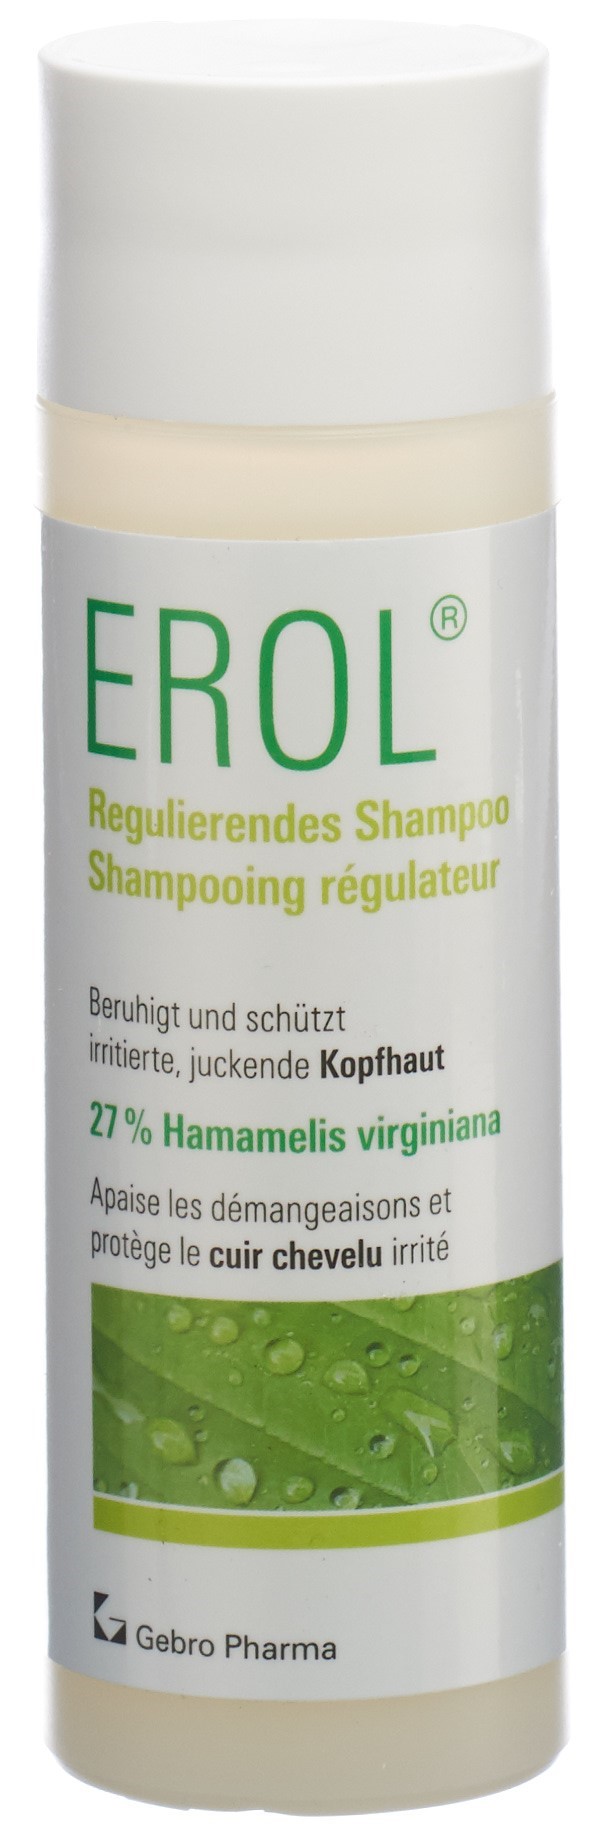 EROL regulierendes Shampoo Fl 200 ml